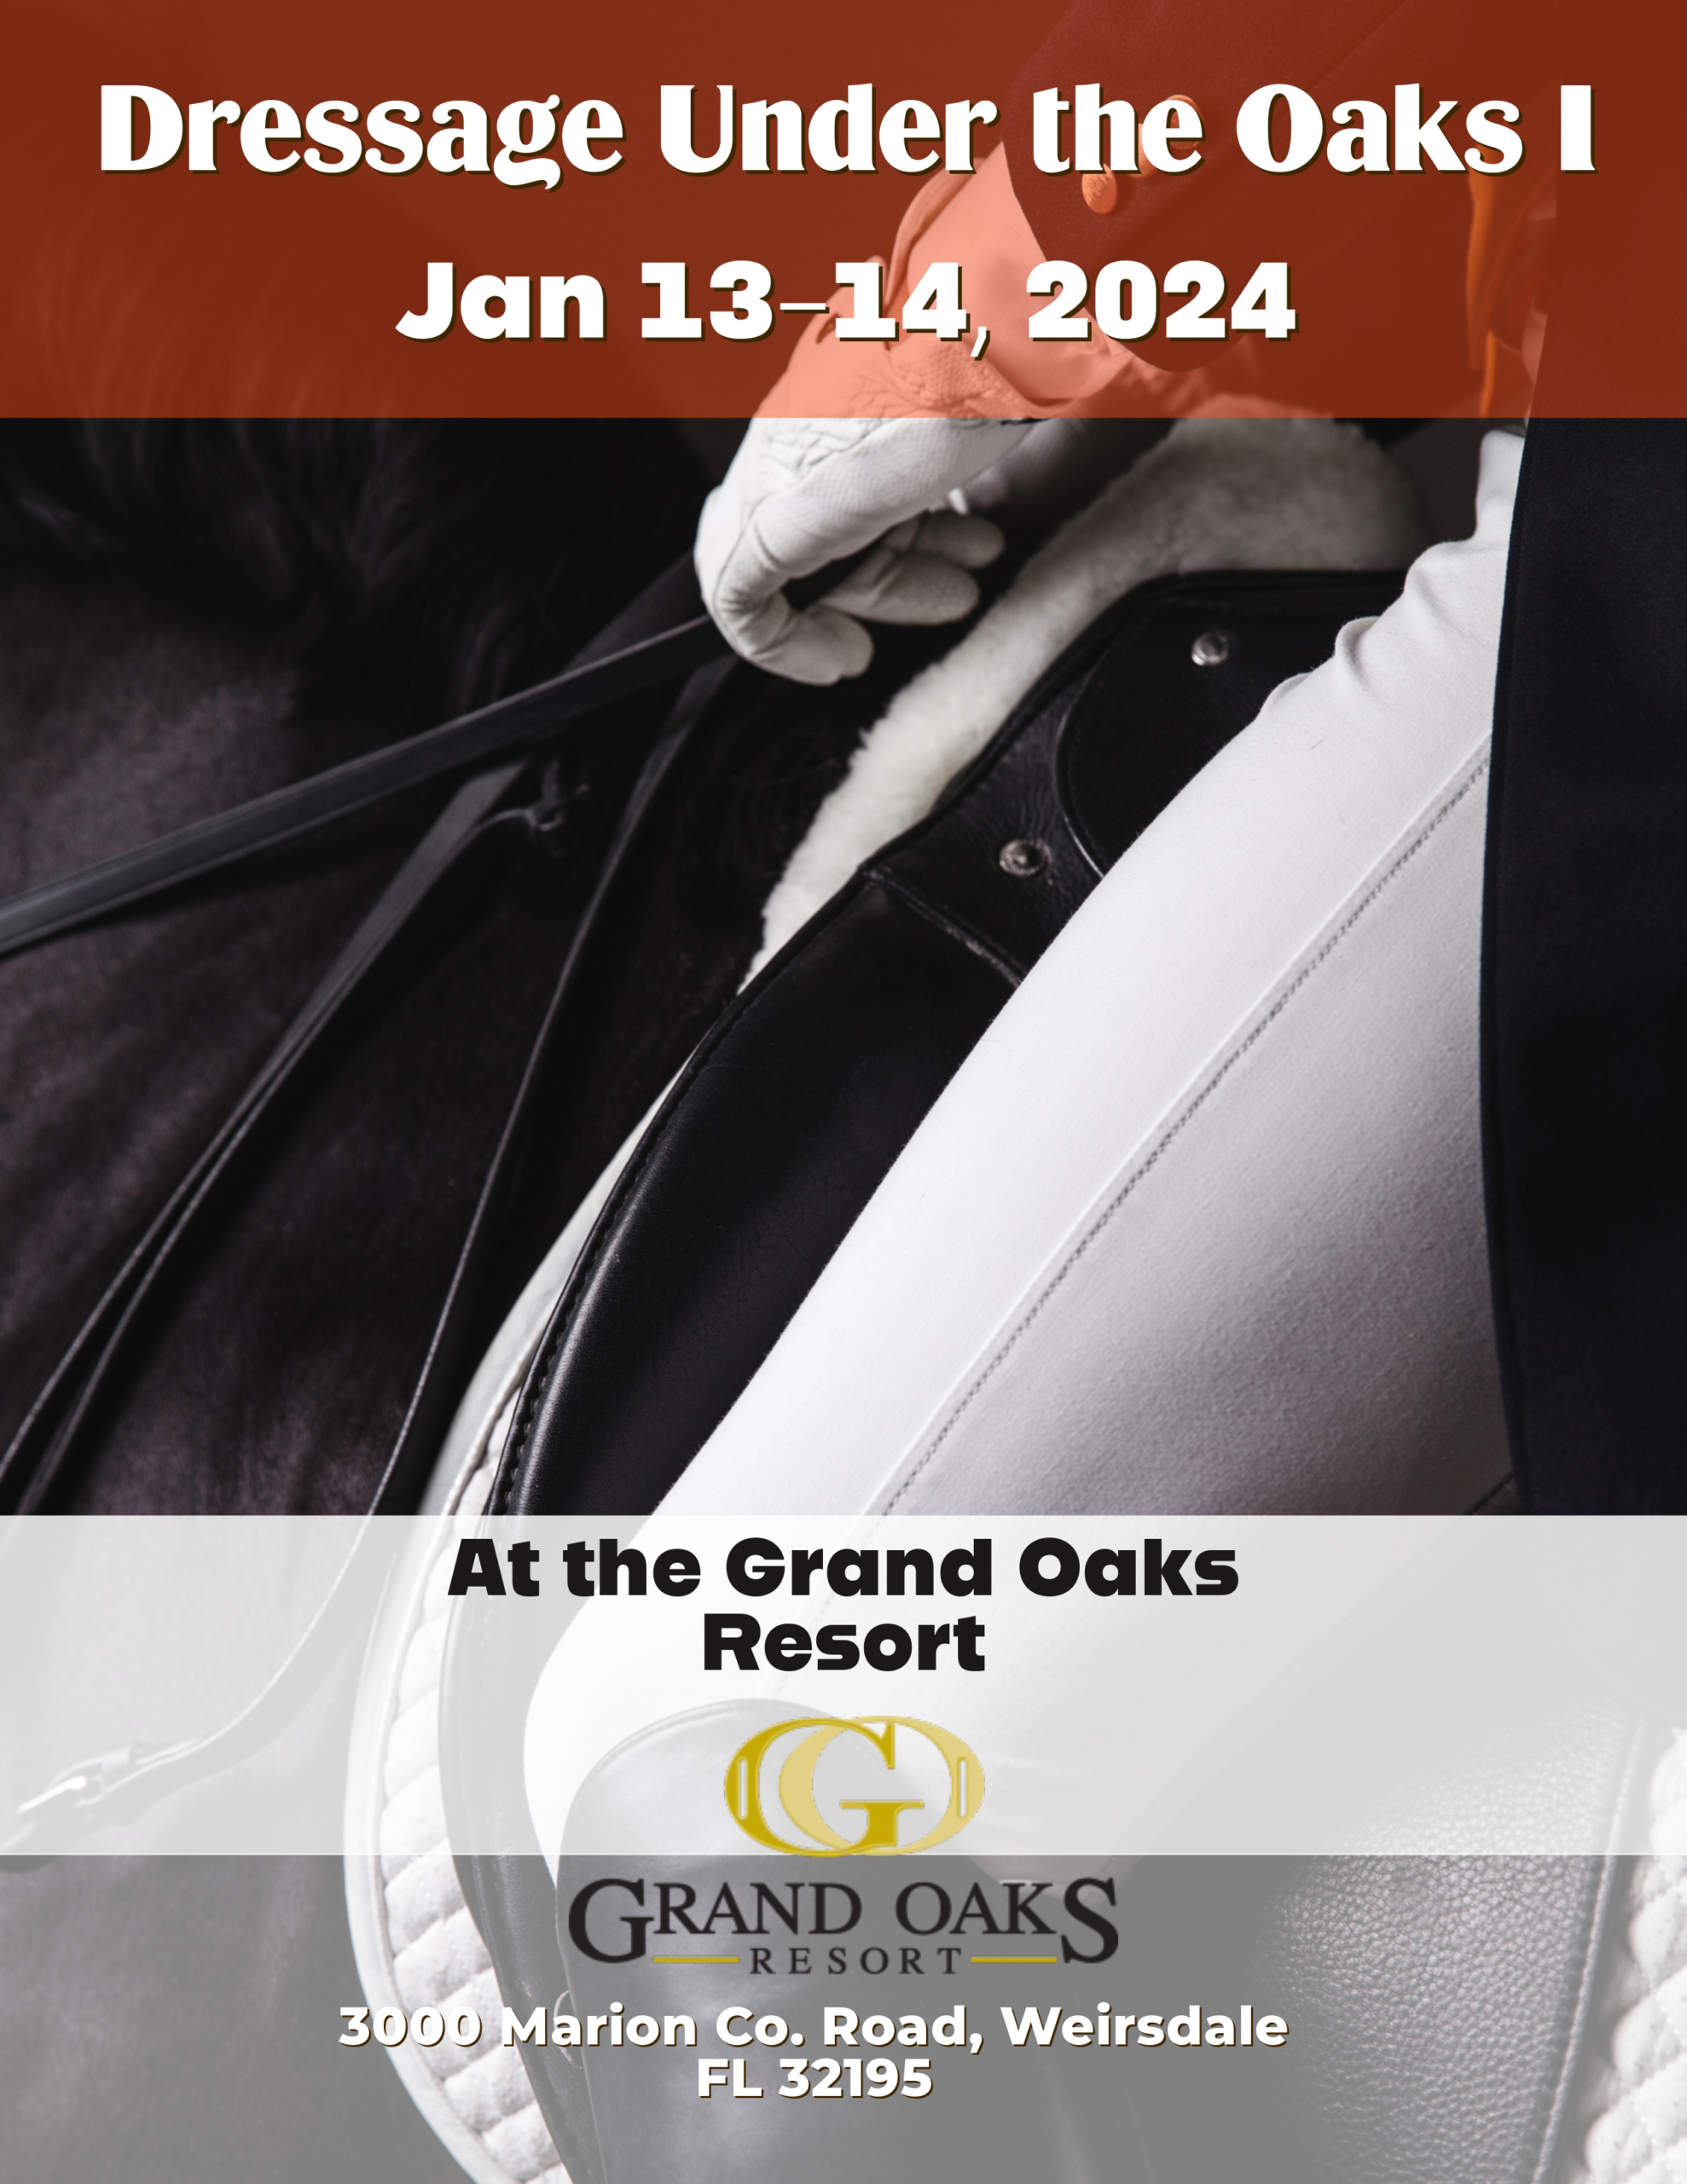 Dressage horse show at the Grand Oaks Resort